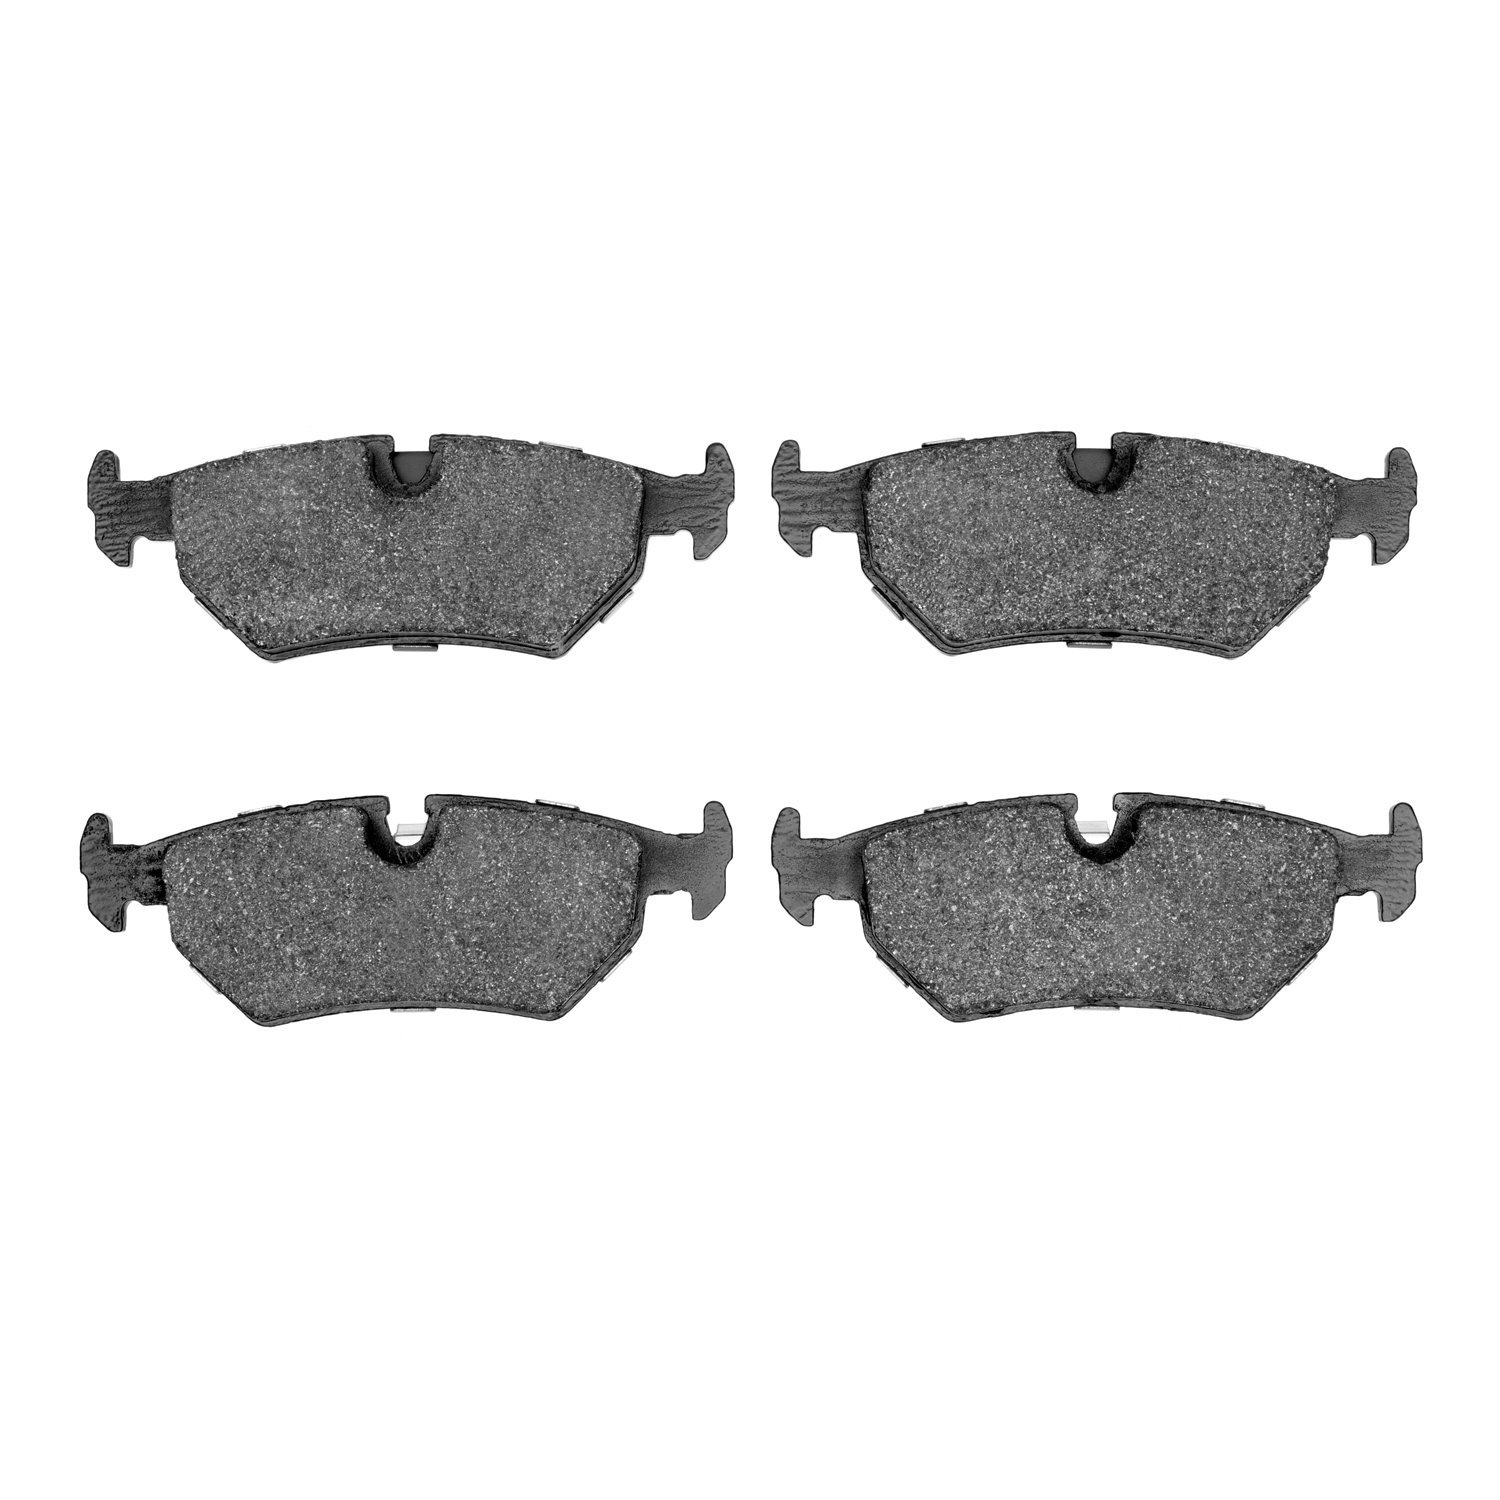 Semi-Metallic Brake Pads, 1990-2004 Fits Multiple Makes/Models, Position: Rear